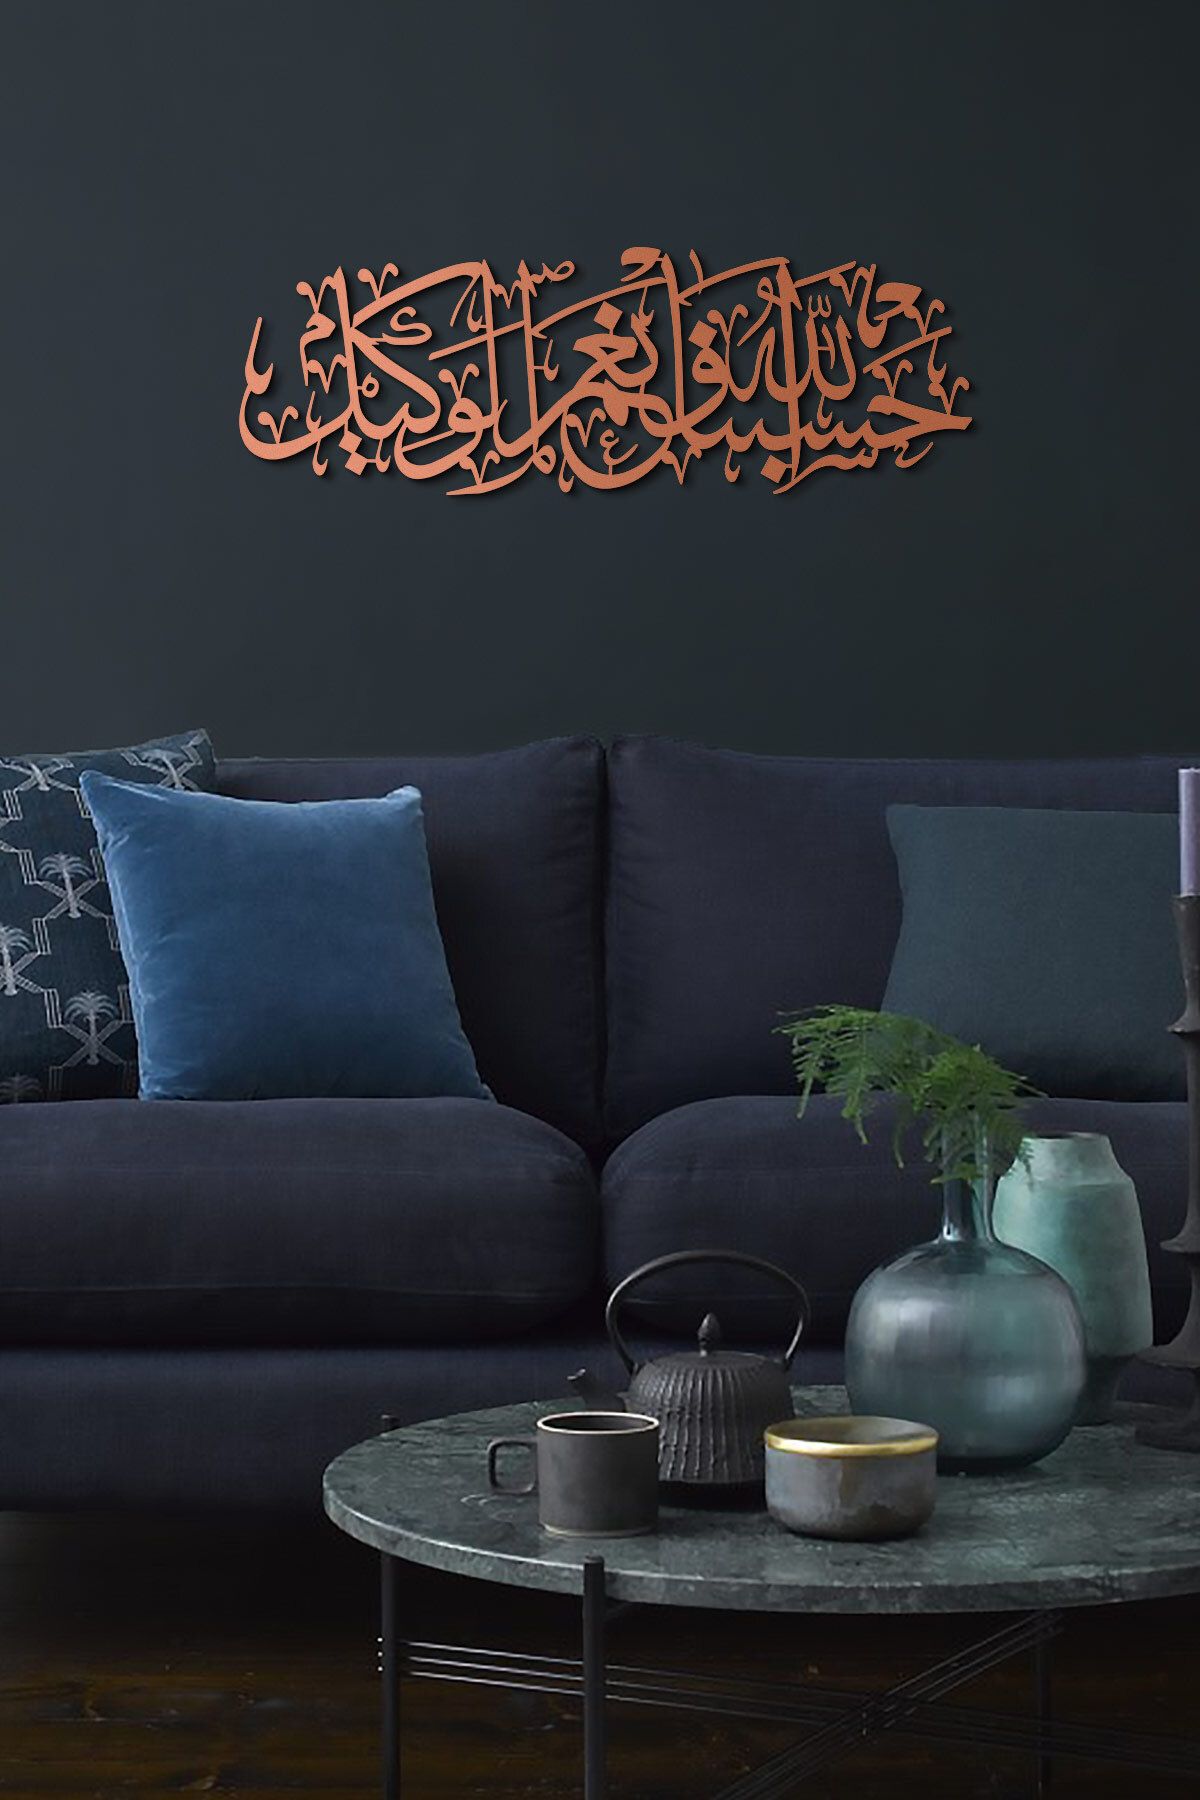 Deryashomelove - Poster; Islam, Dekoration, Home, Kunst, Bize Allah yeter O  ne güzel vekildir